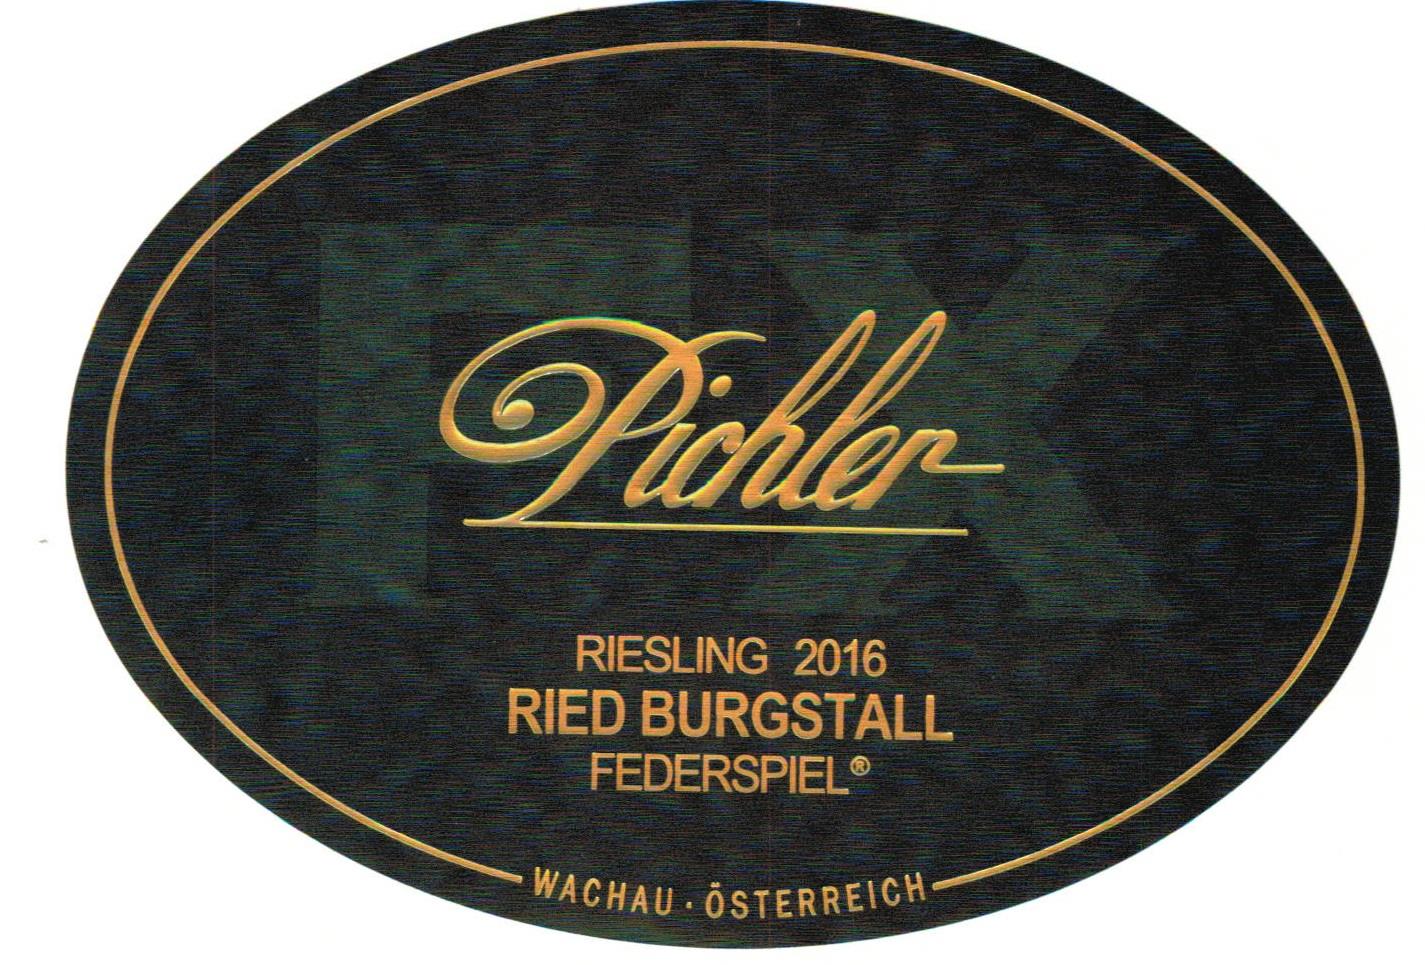 2019 FX PICHLER RIESLING RIED BURGSTALL FEDERSPIEL AUSTRIA image